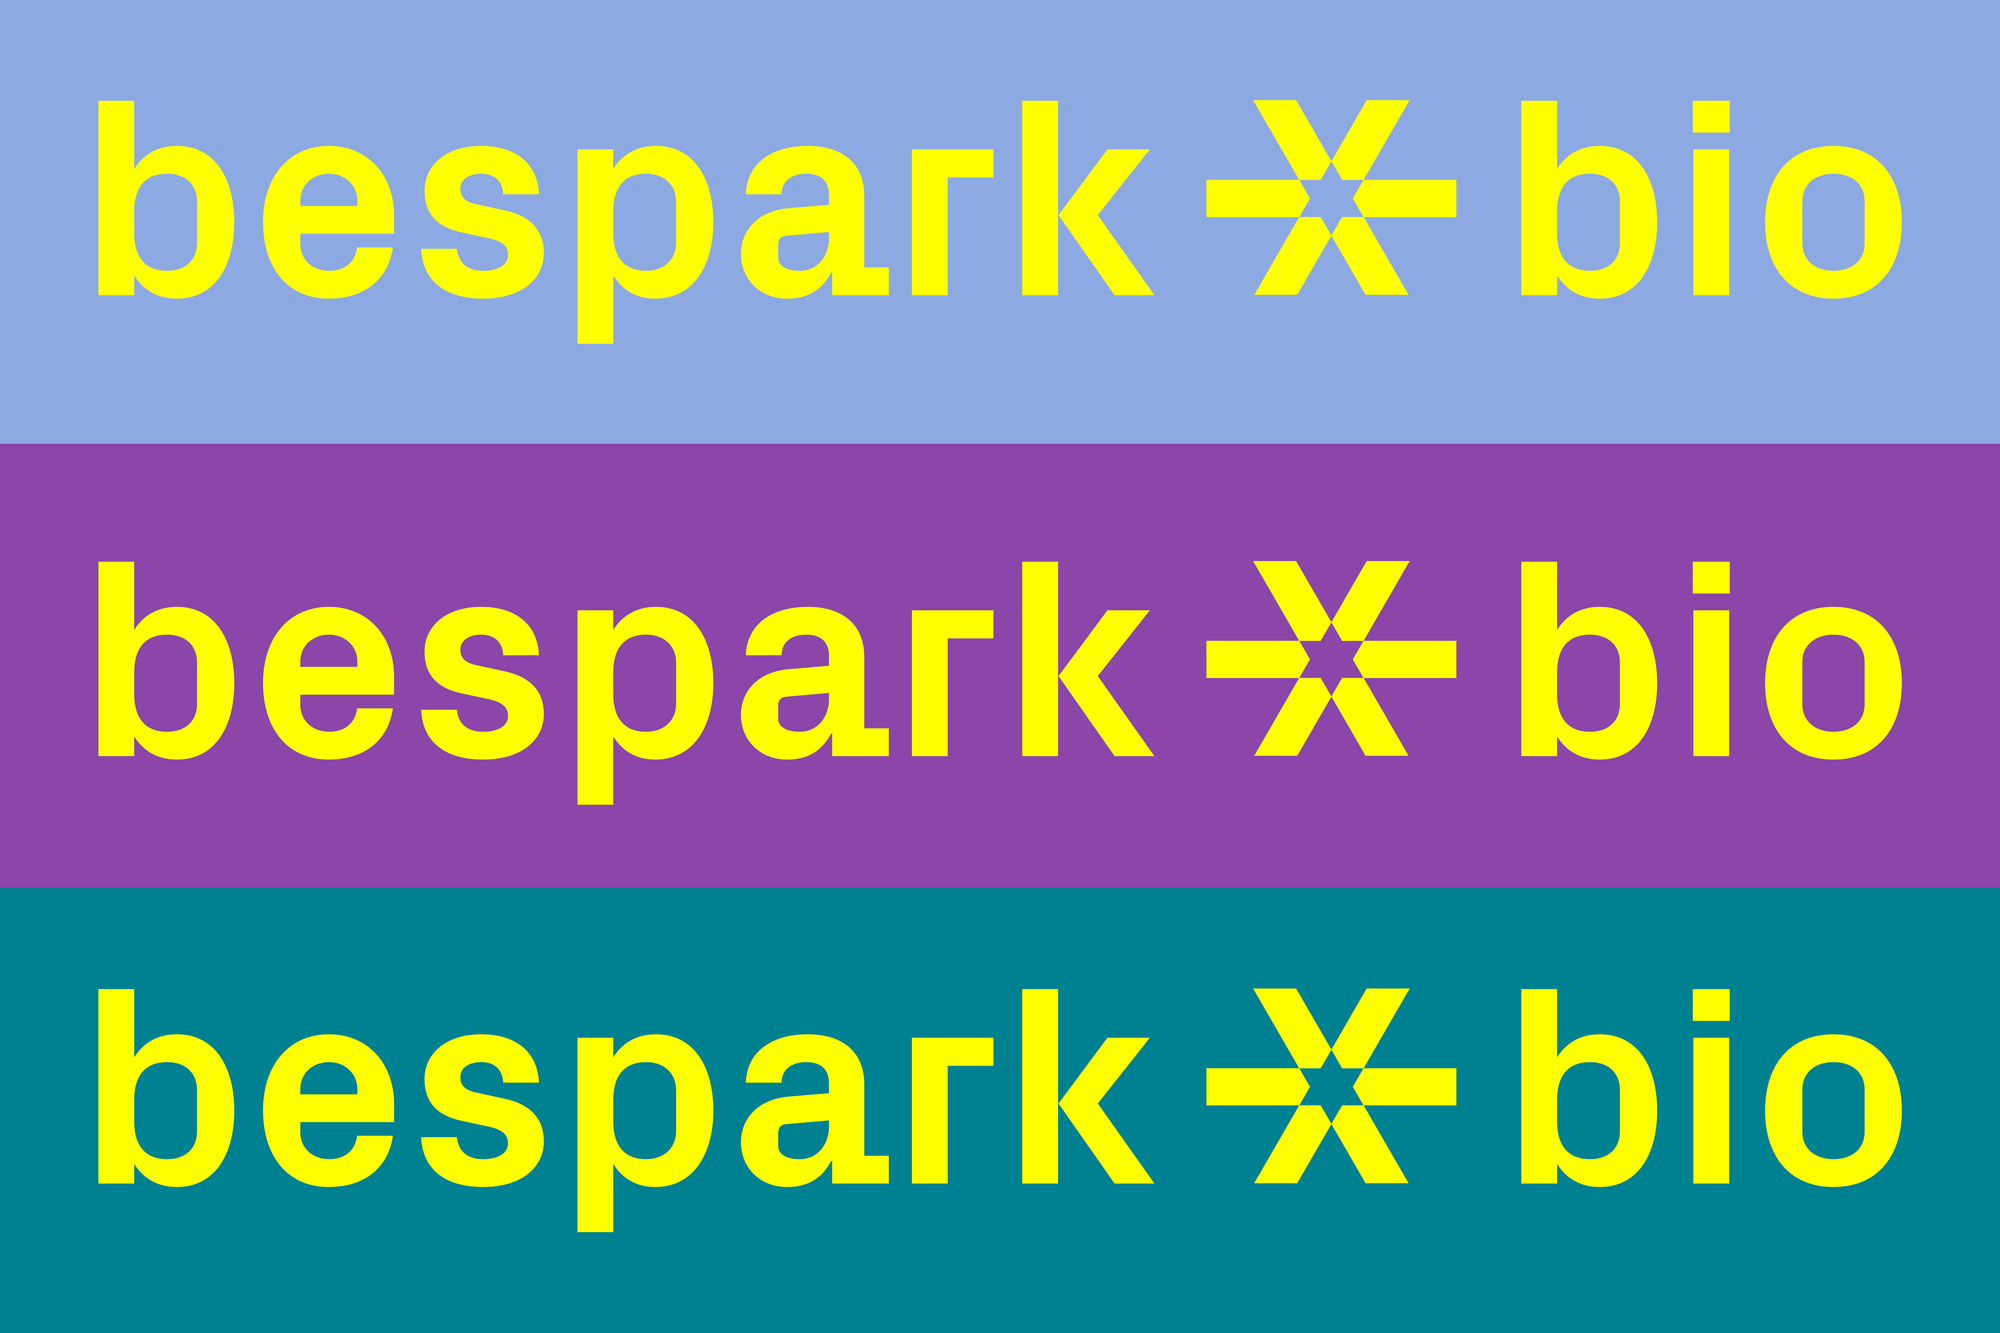 bespark-bio-03